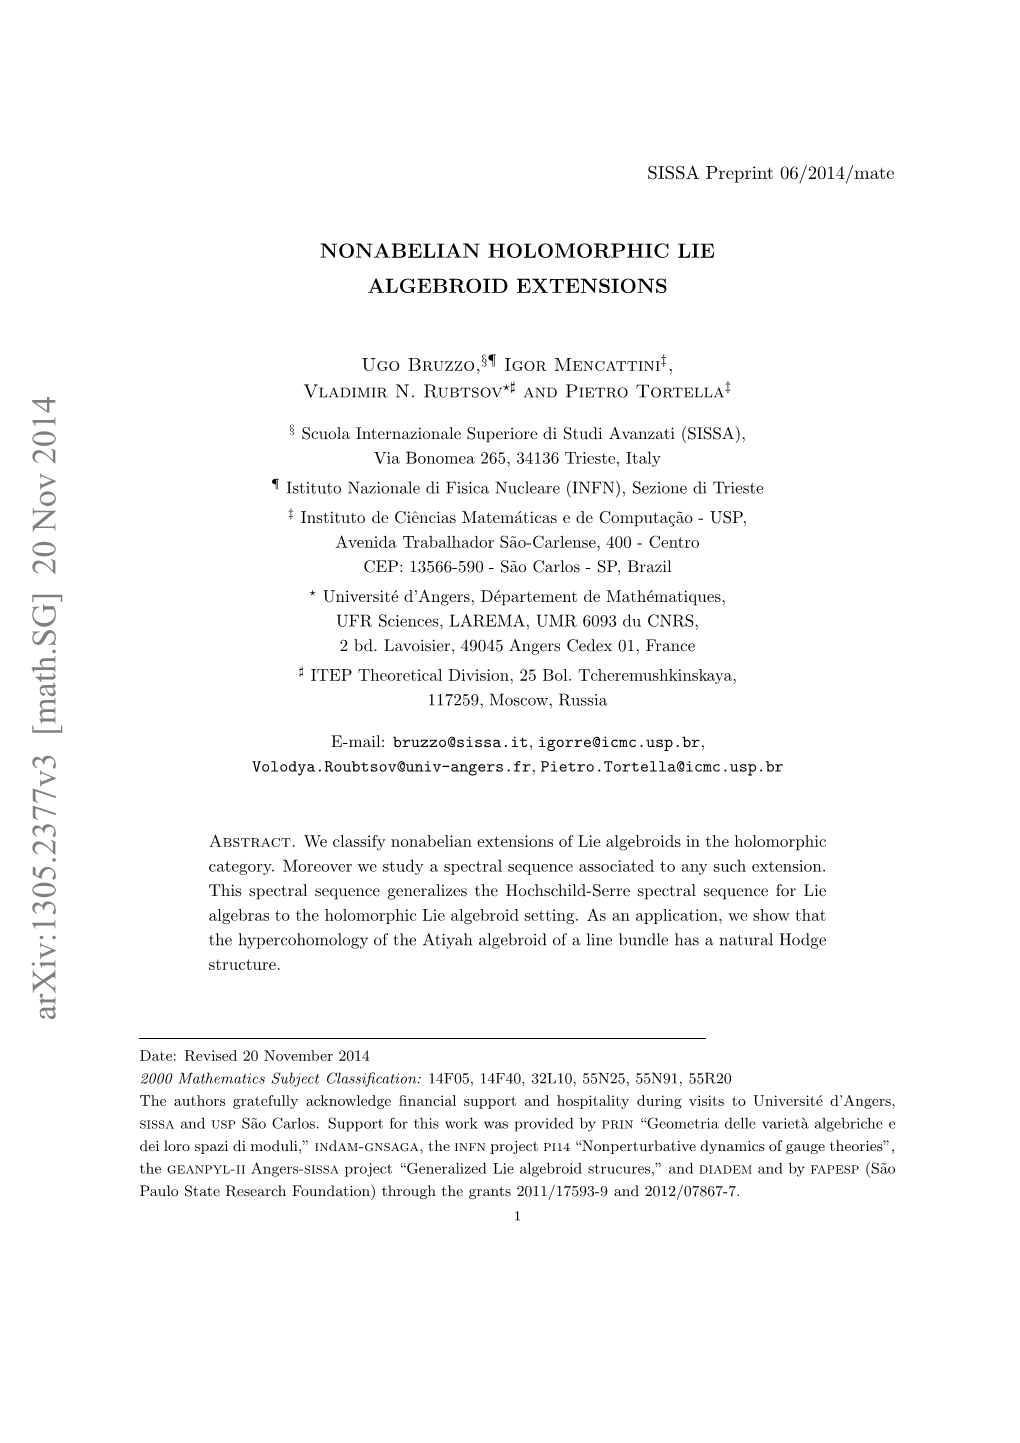 Nonabelian Holomorphic Lie Algebroid Extensions